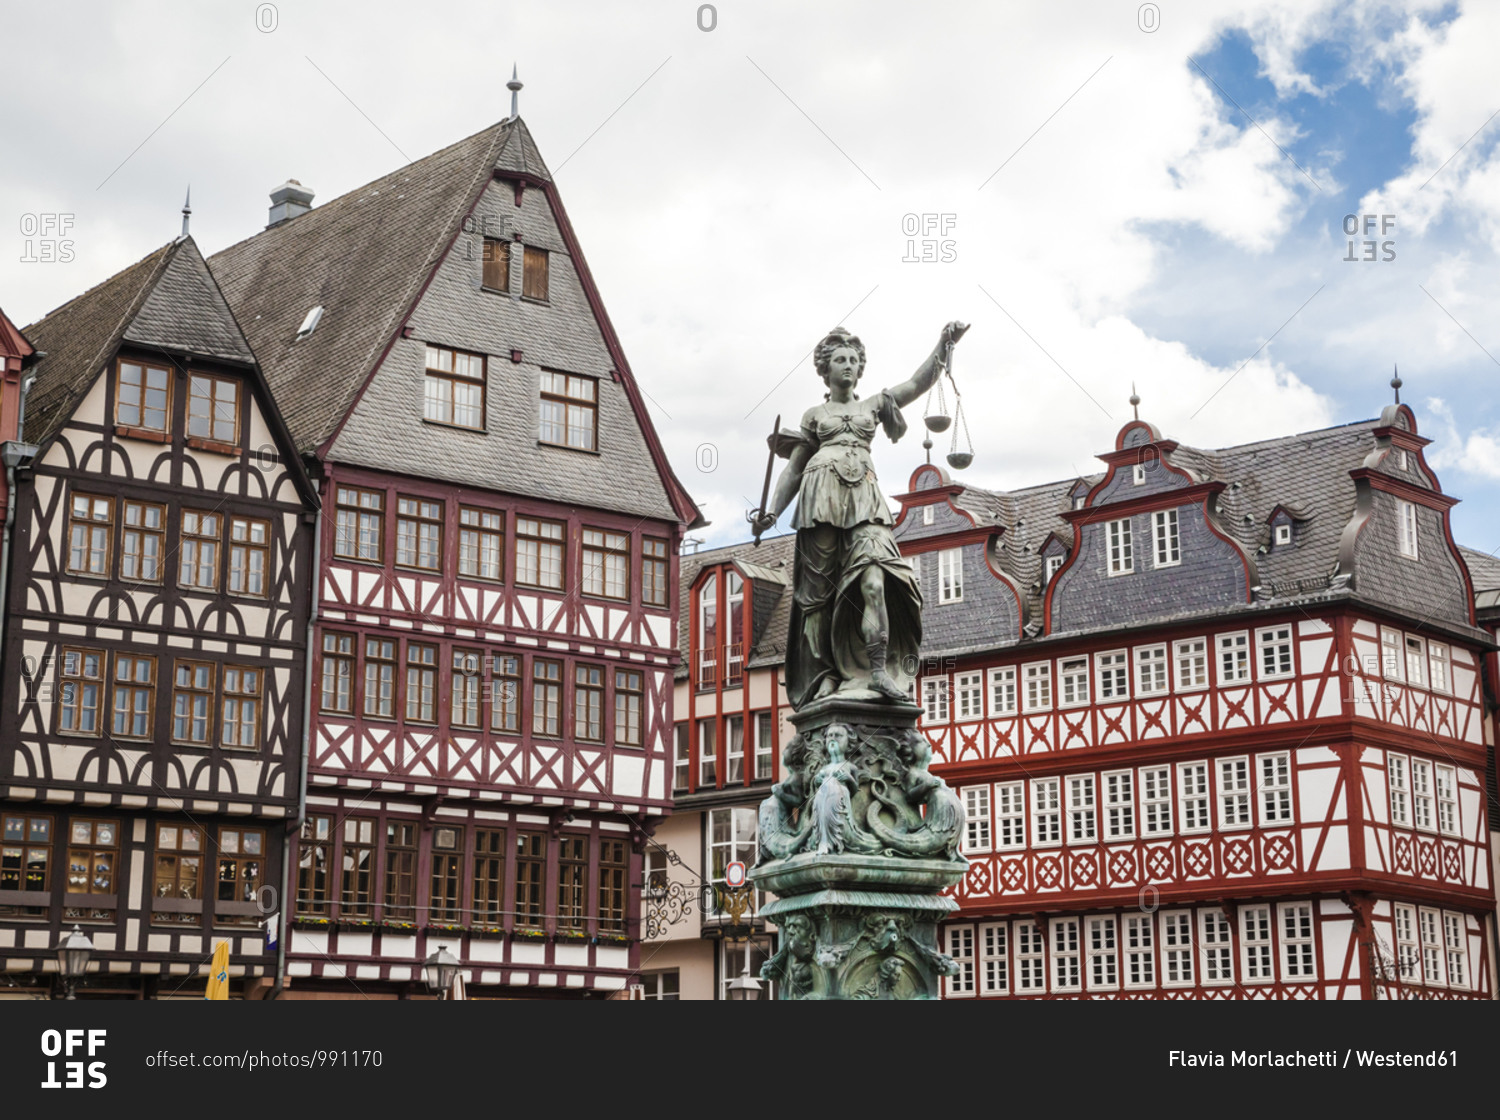 Germany- Frankfurt- Old buildings and statue on Romerberg square